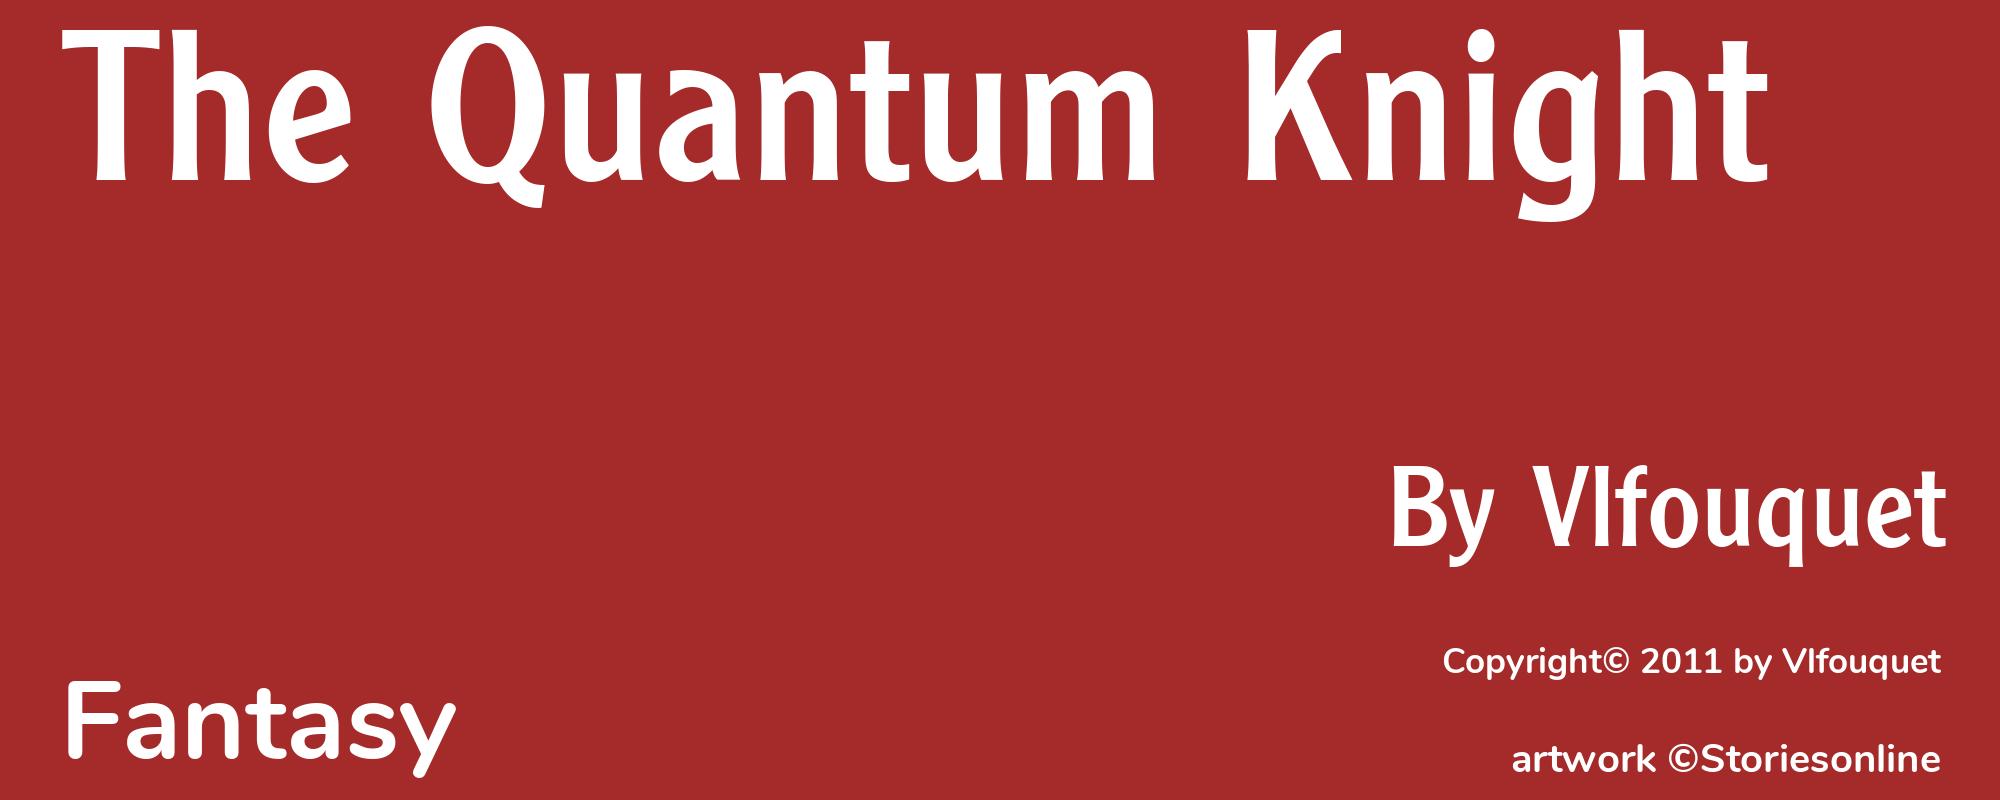 The Quantum Knight - Cover